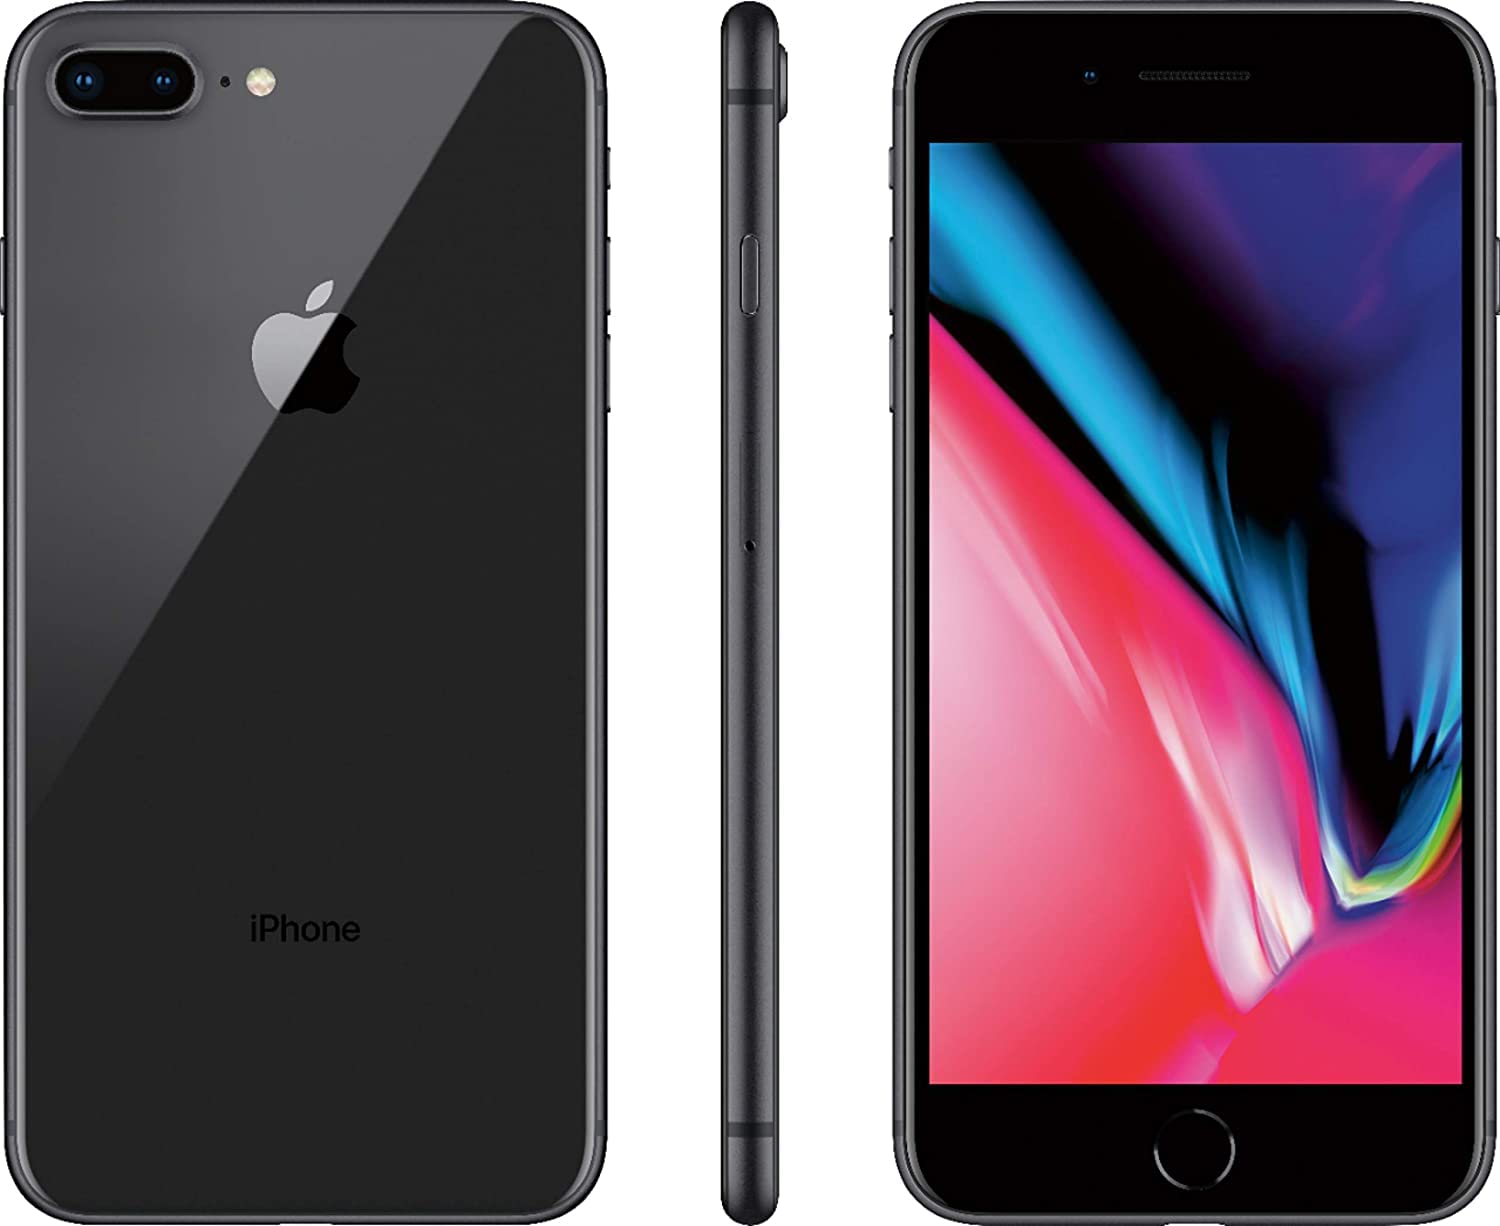 Apple iPhone 8 Plus, US Version, 64GB, Space Gray - GSM Carriers (Renewed)